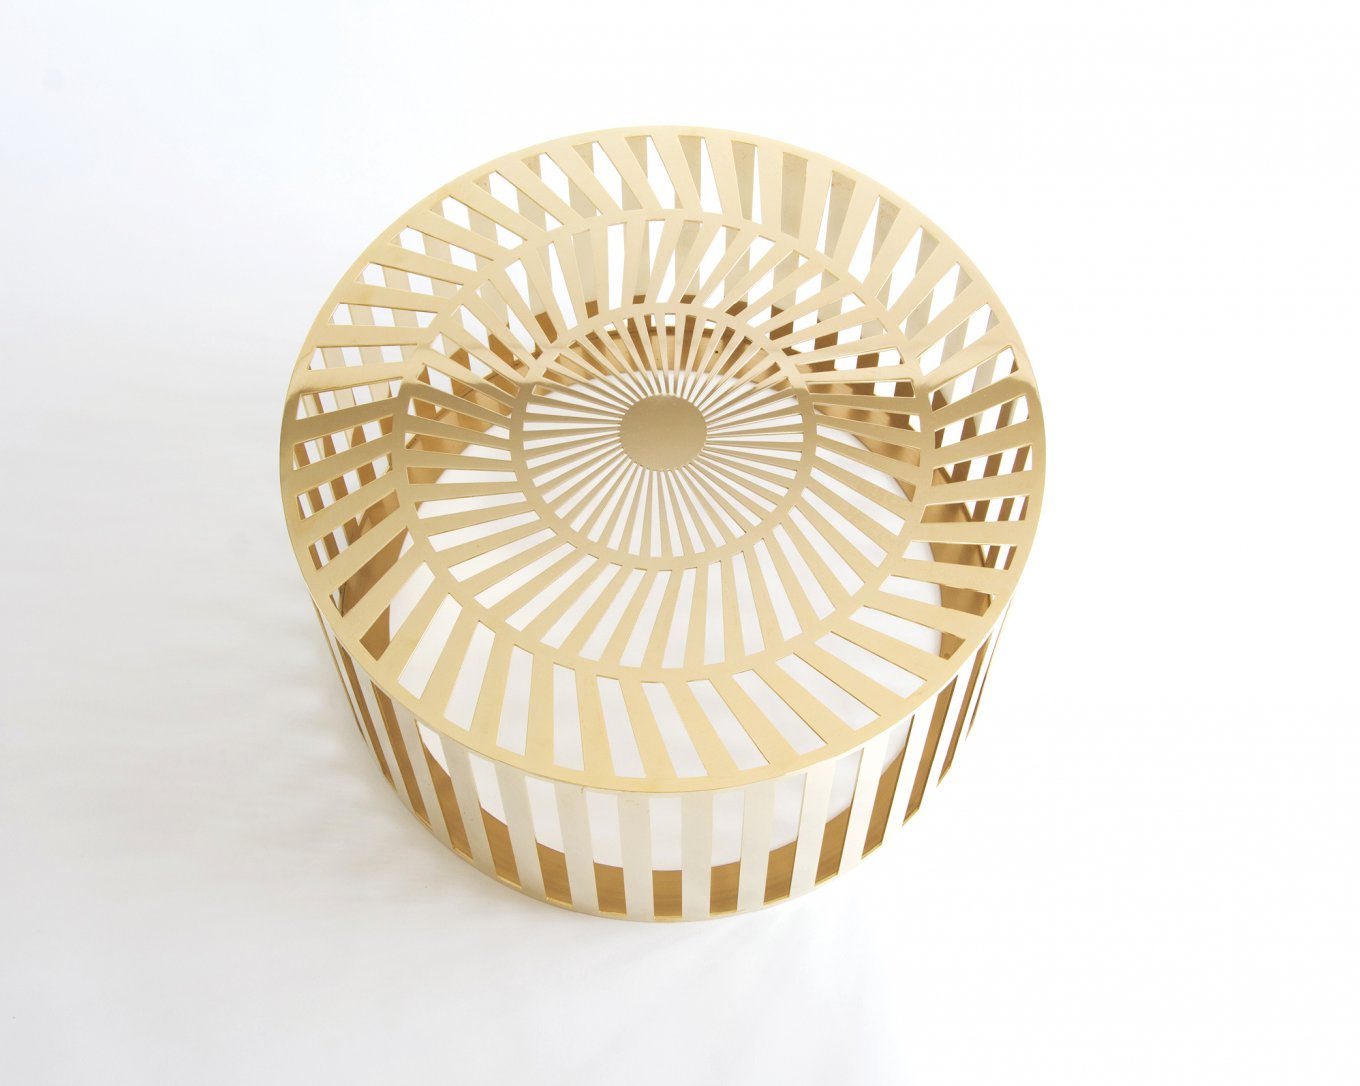 studio catoir collection design round gold metal low table elica 2